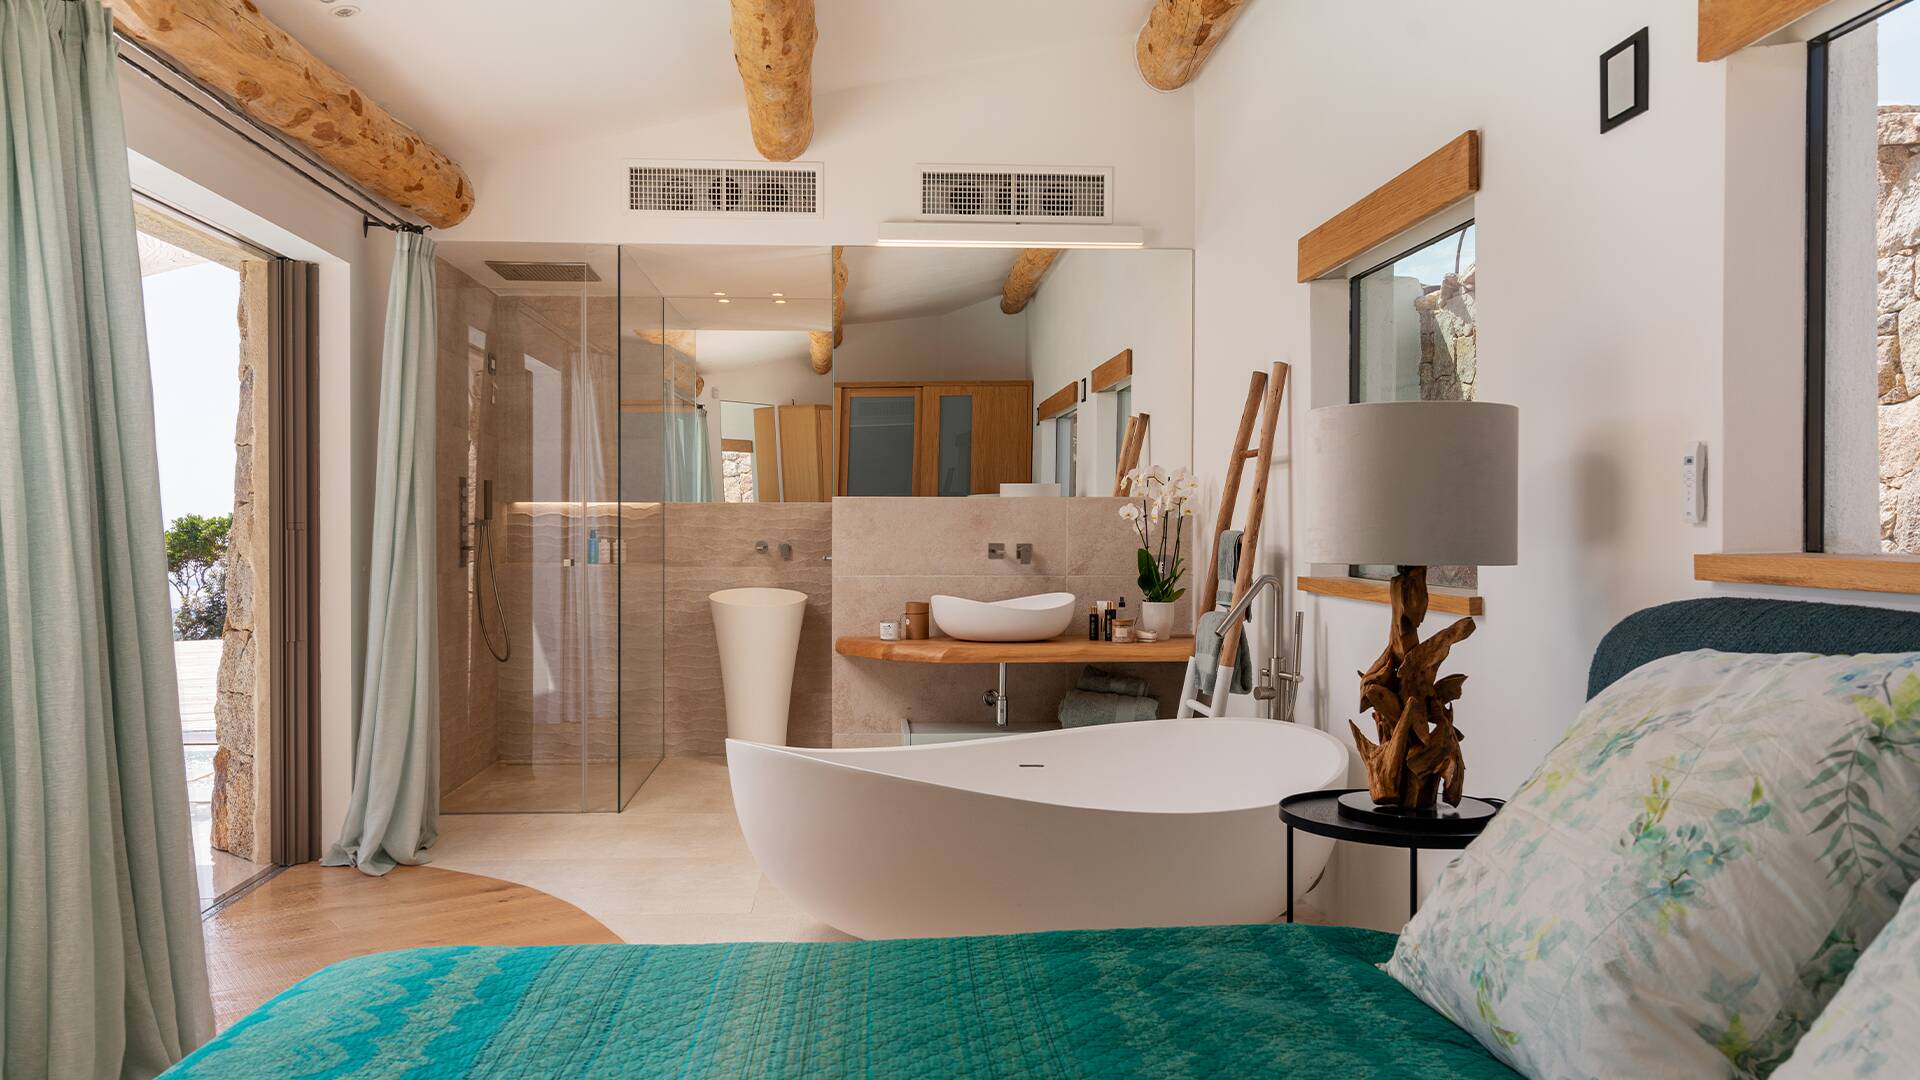 en suite bathroom with bath tub and shower cabin